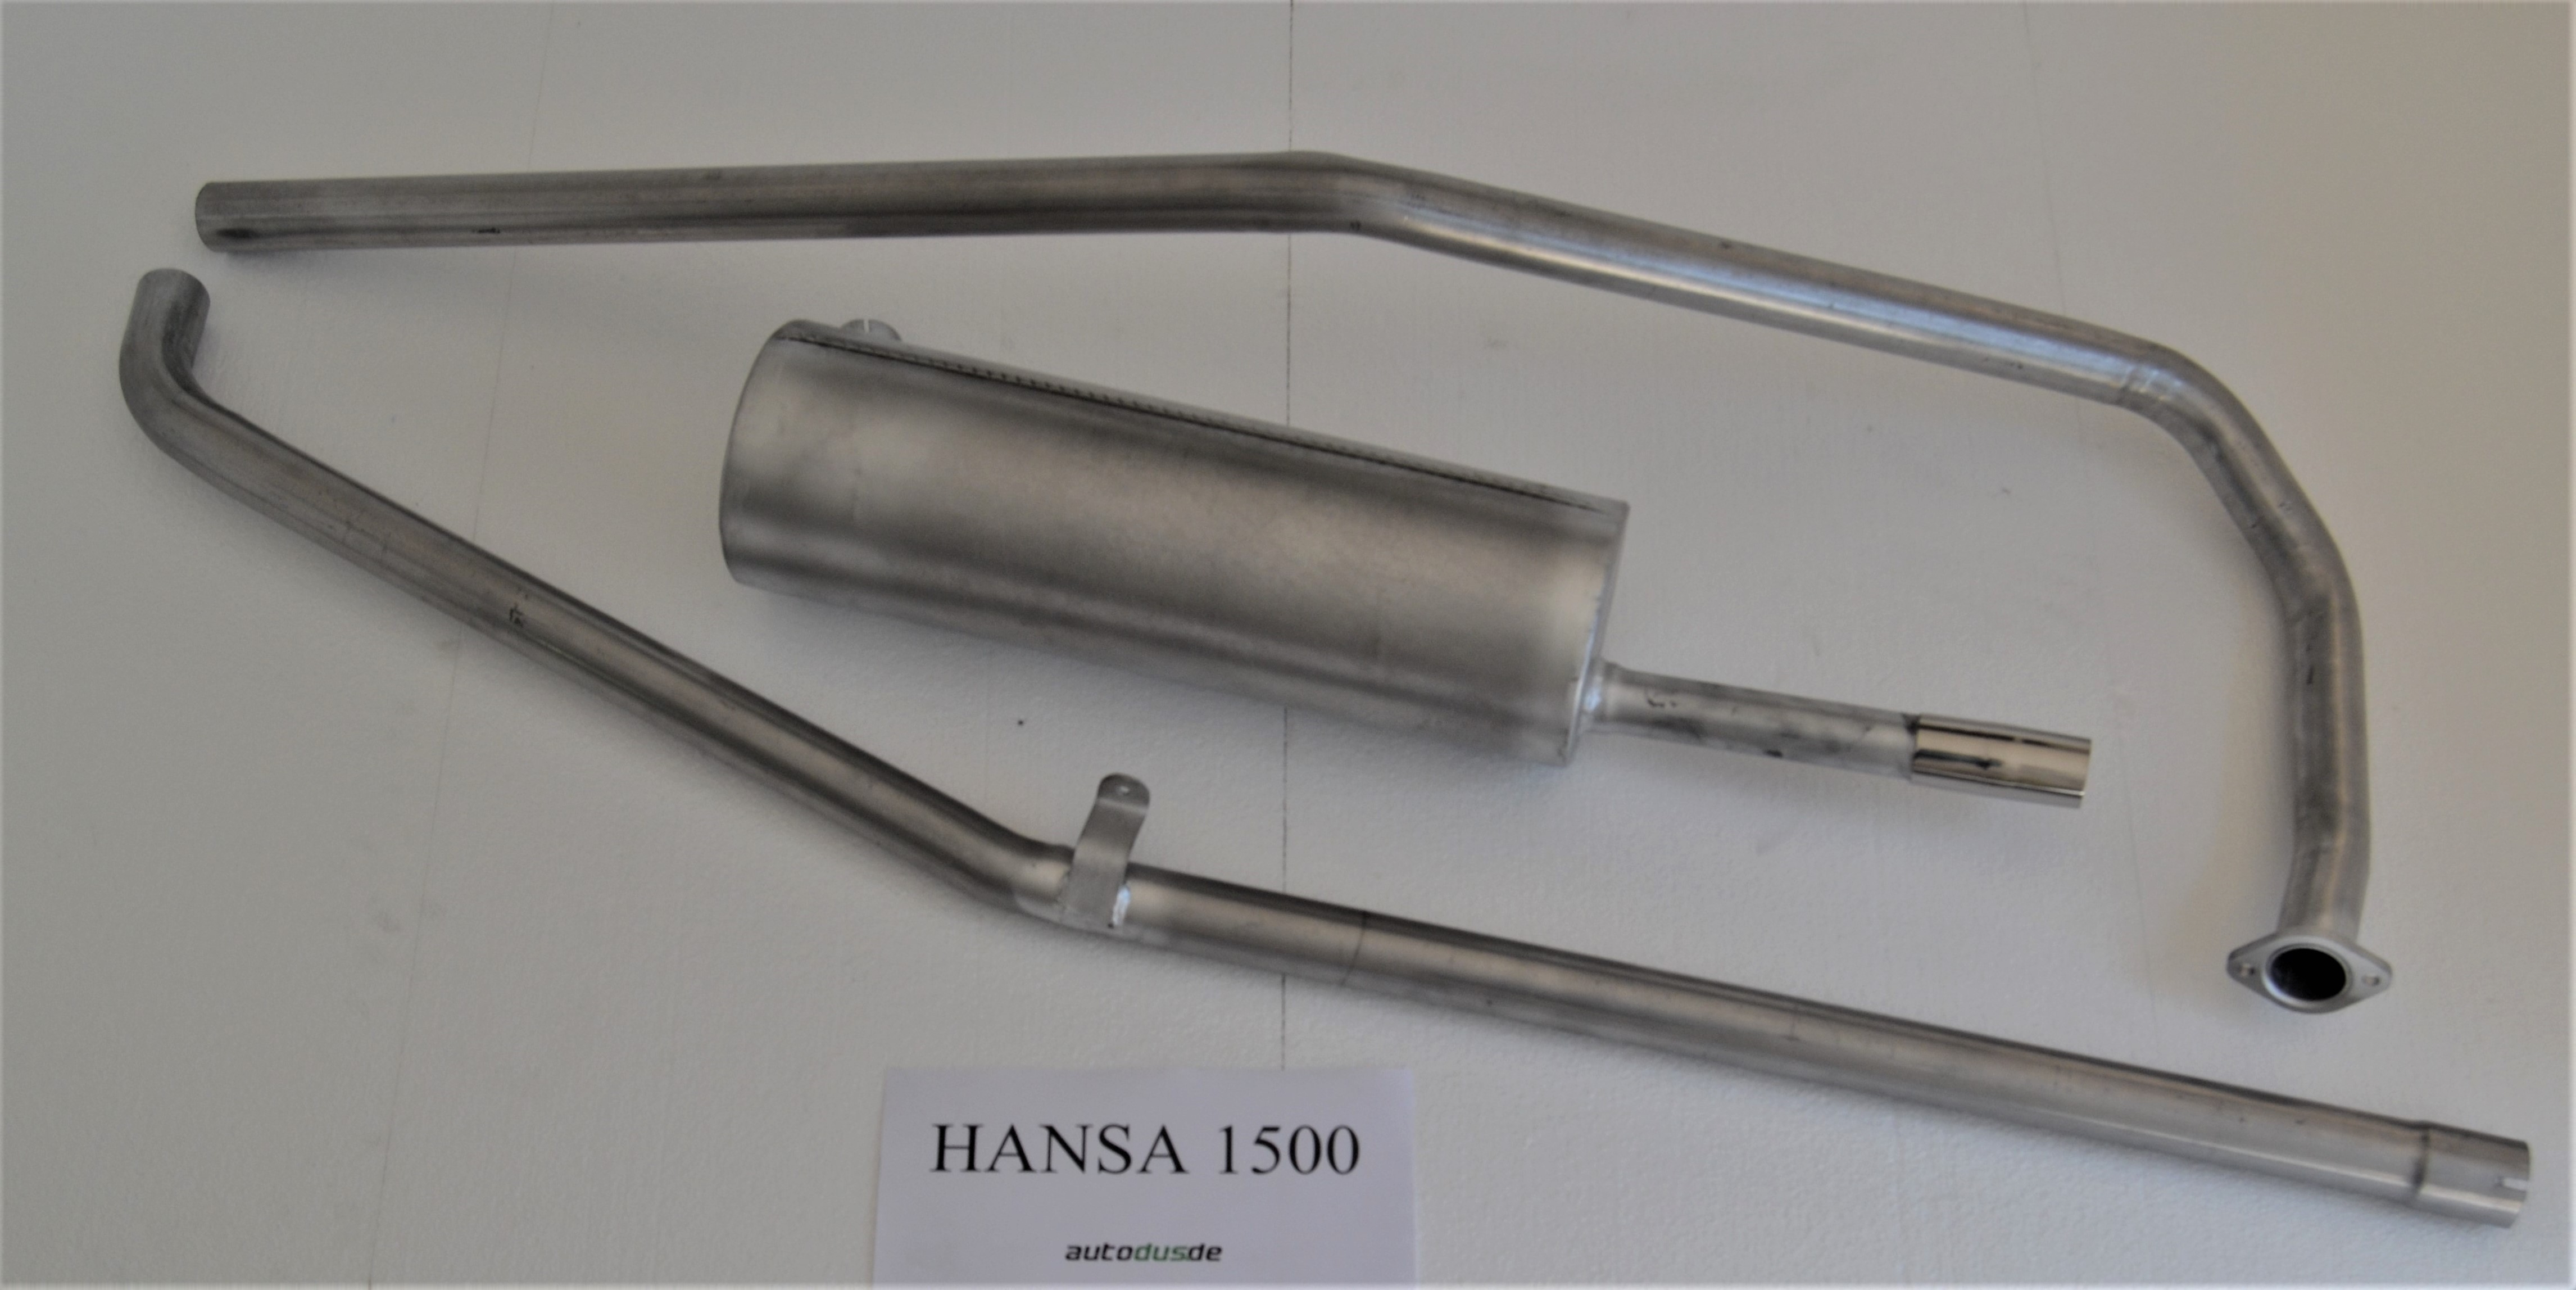 Hansa 1500 1800 Exhaust System